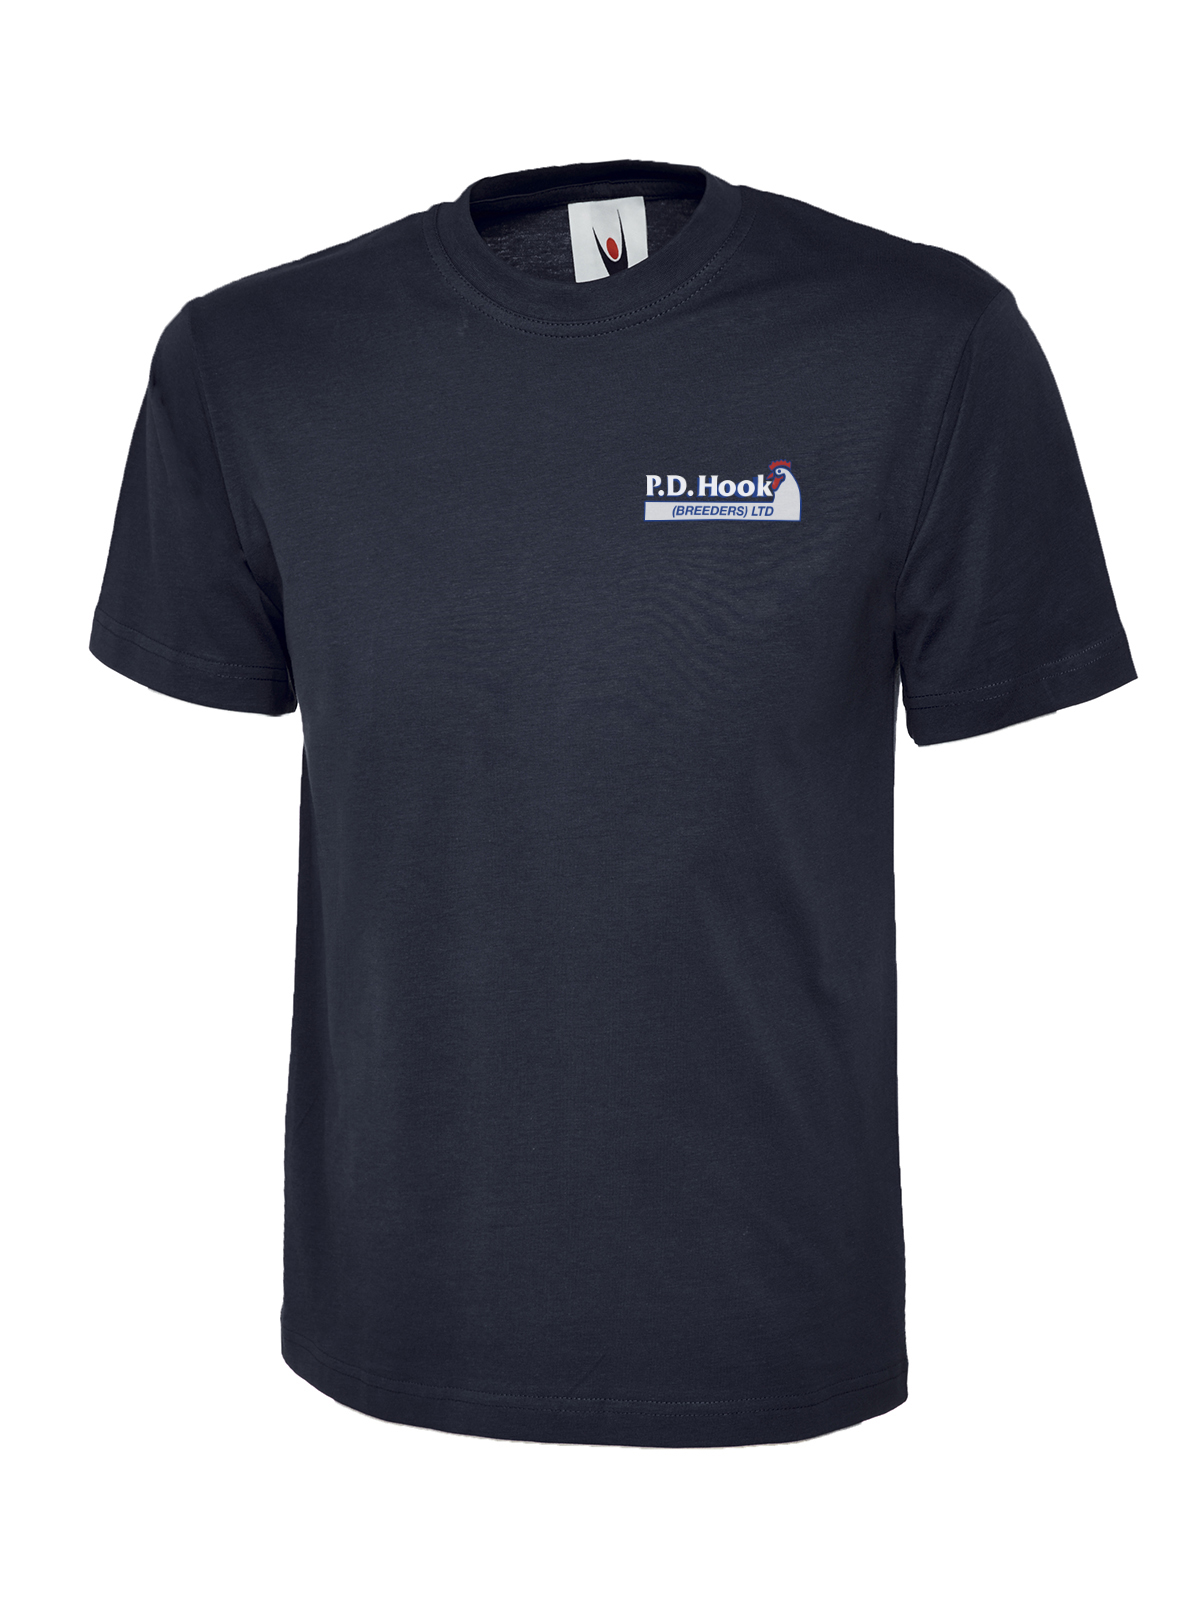 P D Hook (Breeders) Ltd - T-Shirt, Navy - Size Large